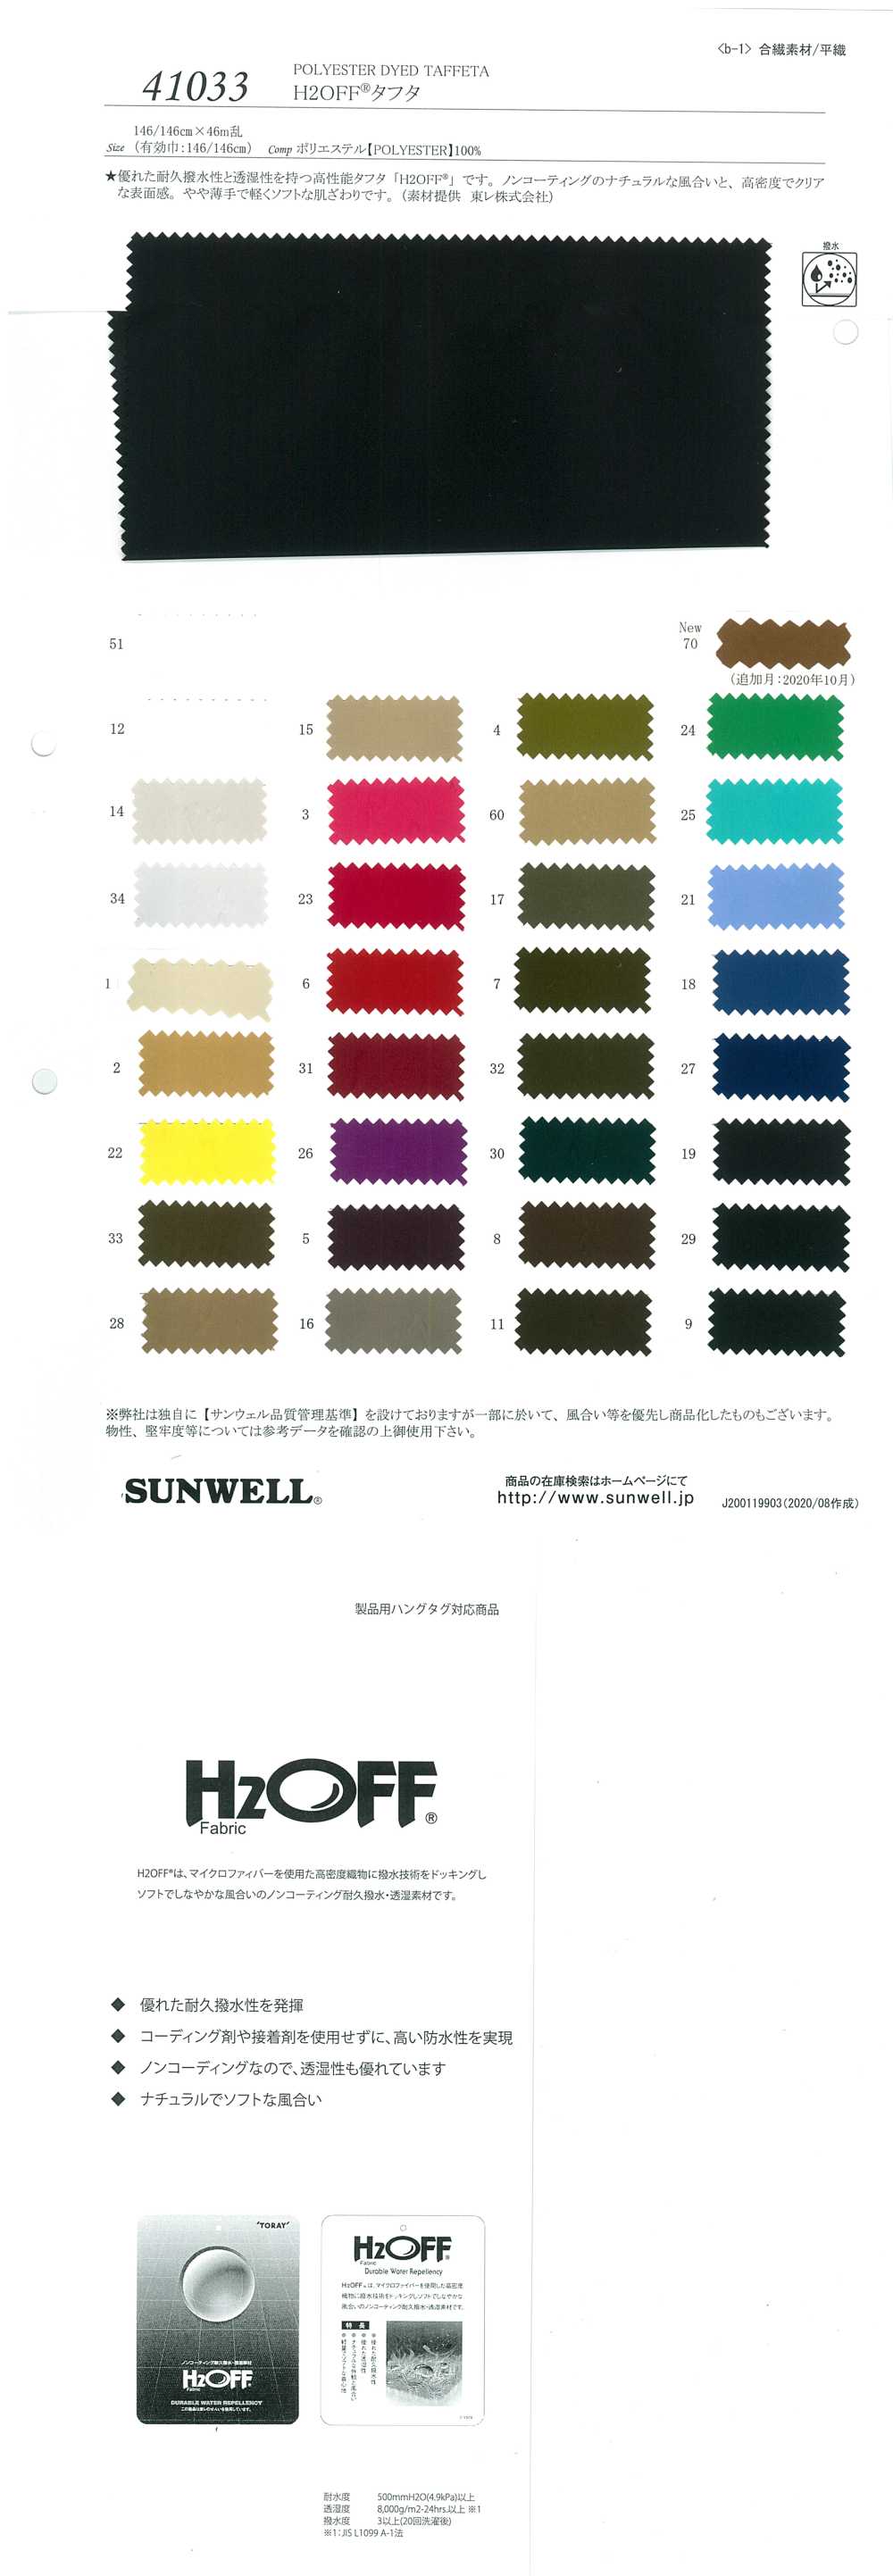 41033 Tafetán H2OFF(R)[Fabrica Textil] SUNWELL